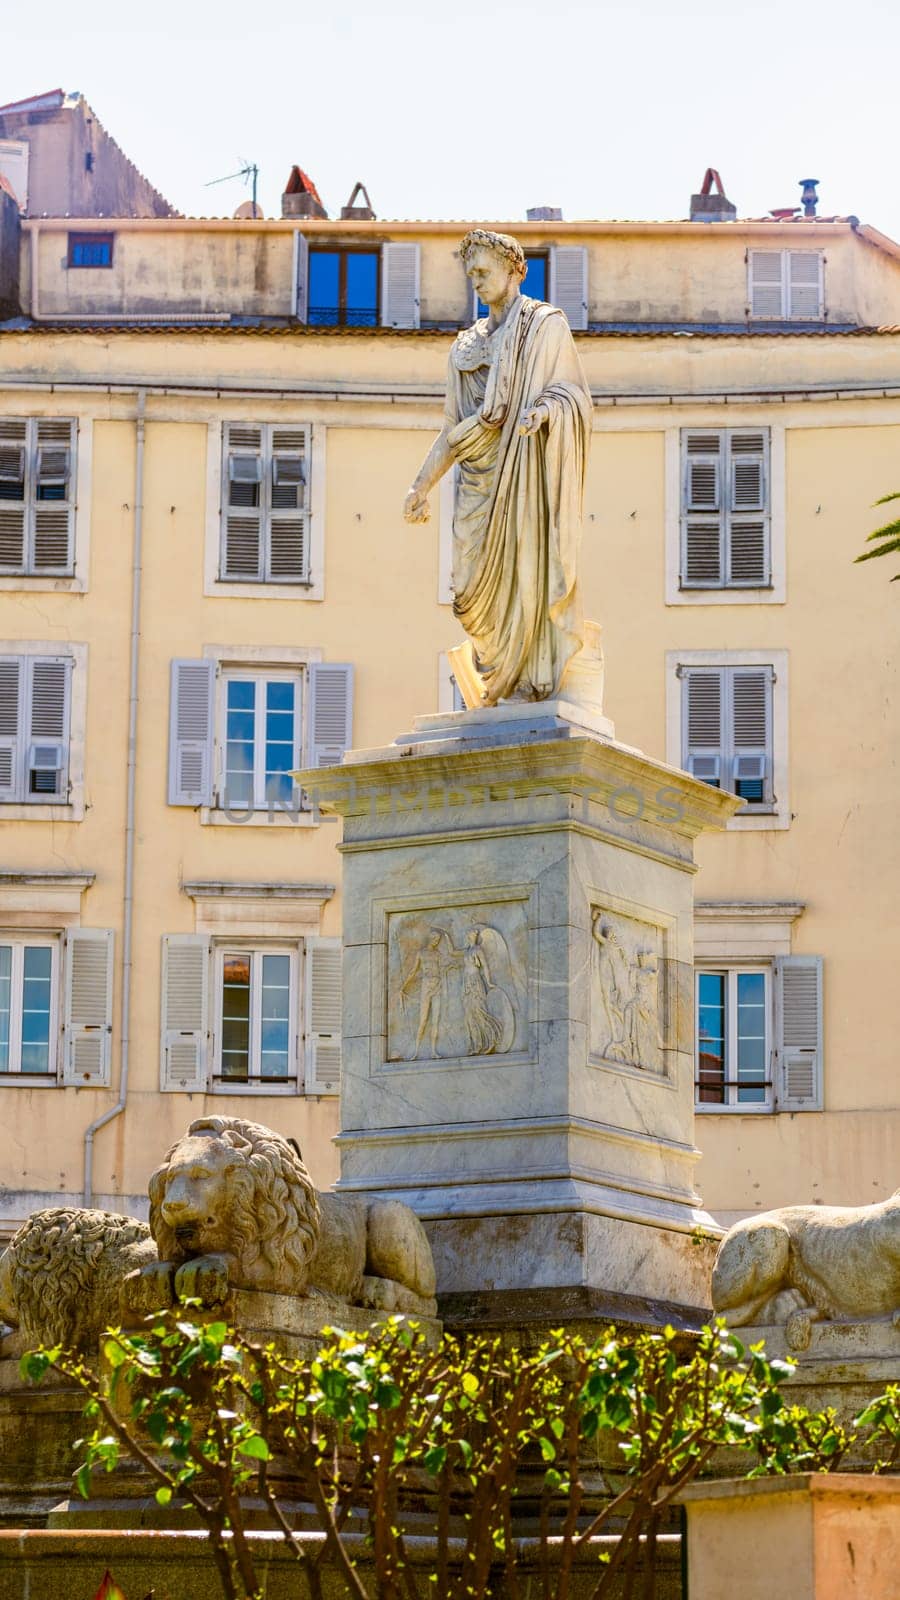 Foch Square and Bonaparte statue by vladispas